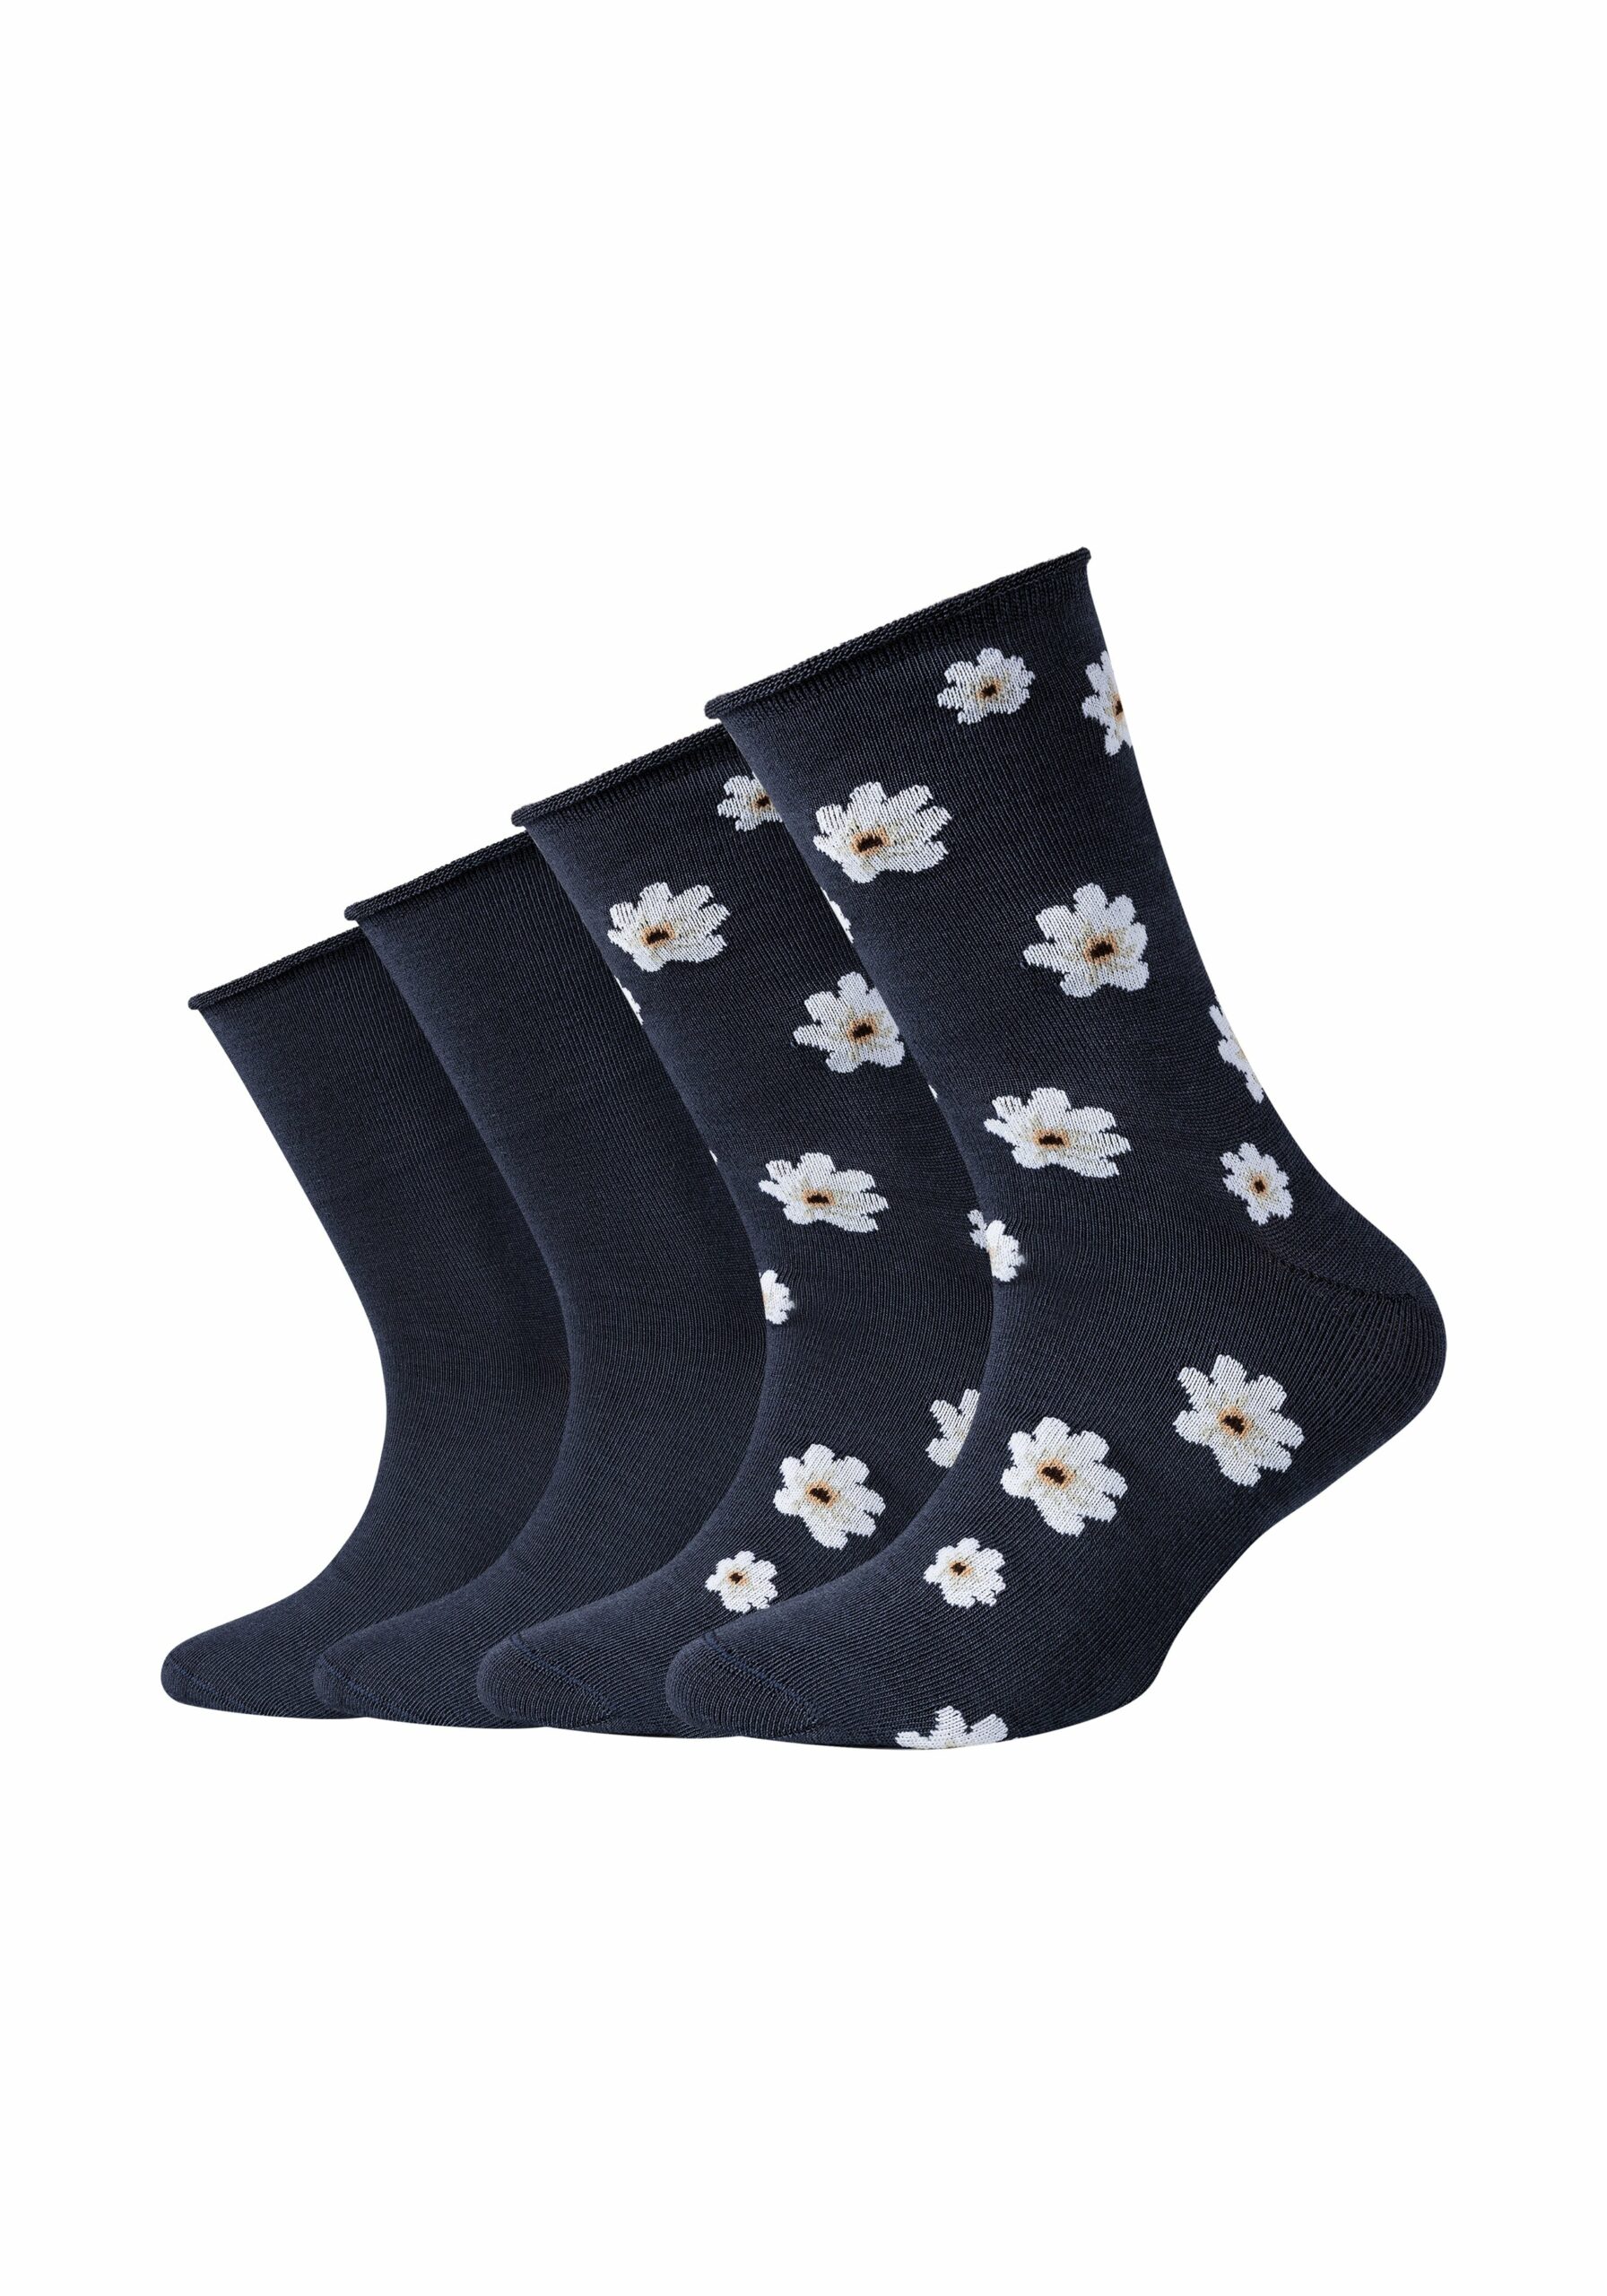 bei 4er s.Oliver Pack Kinder Socken blue kaufen Touch Flower Silky